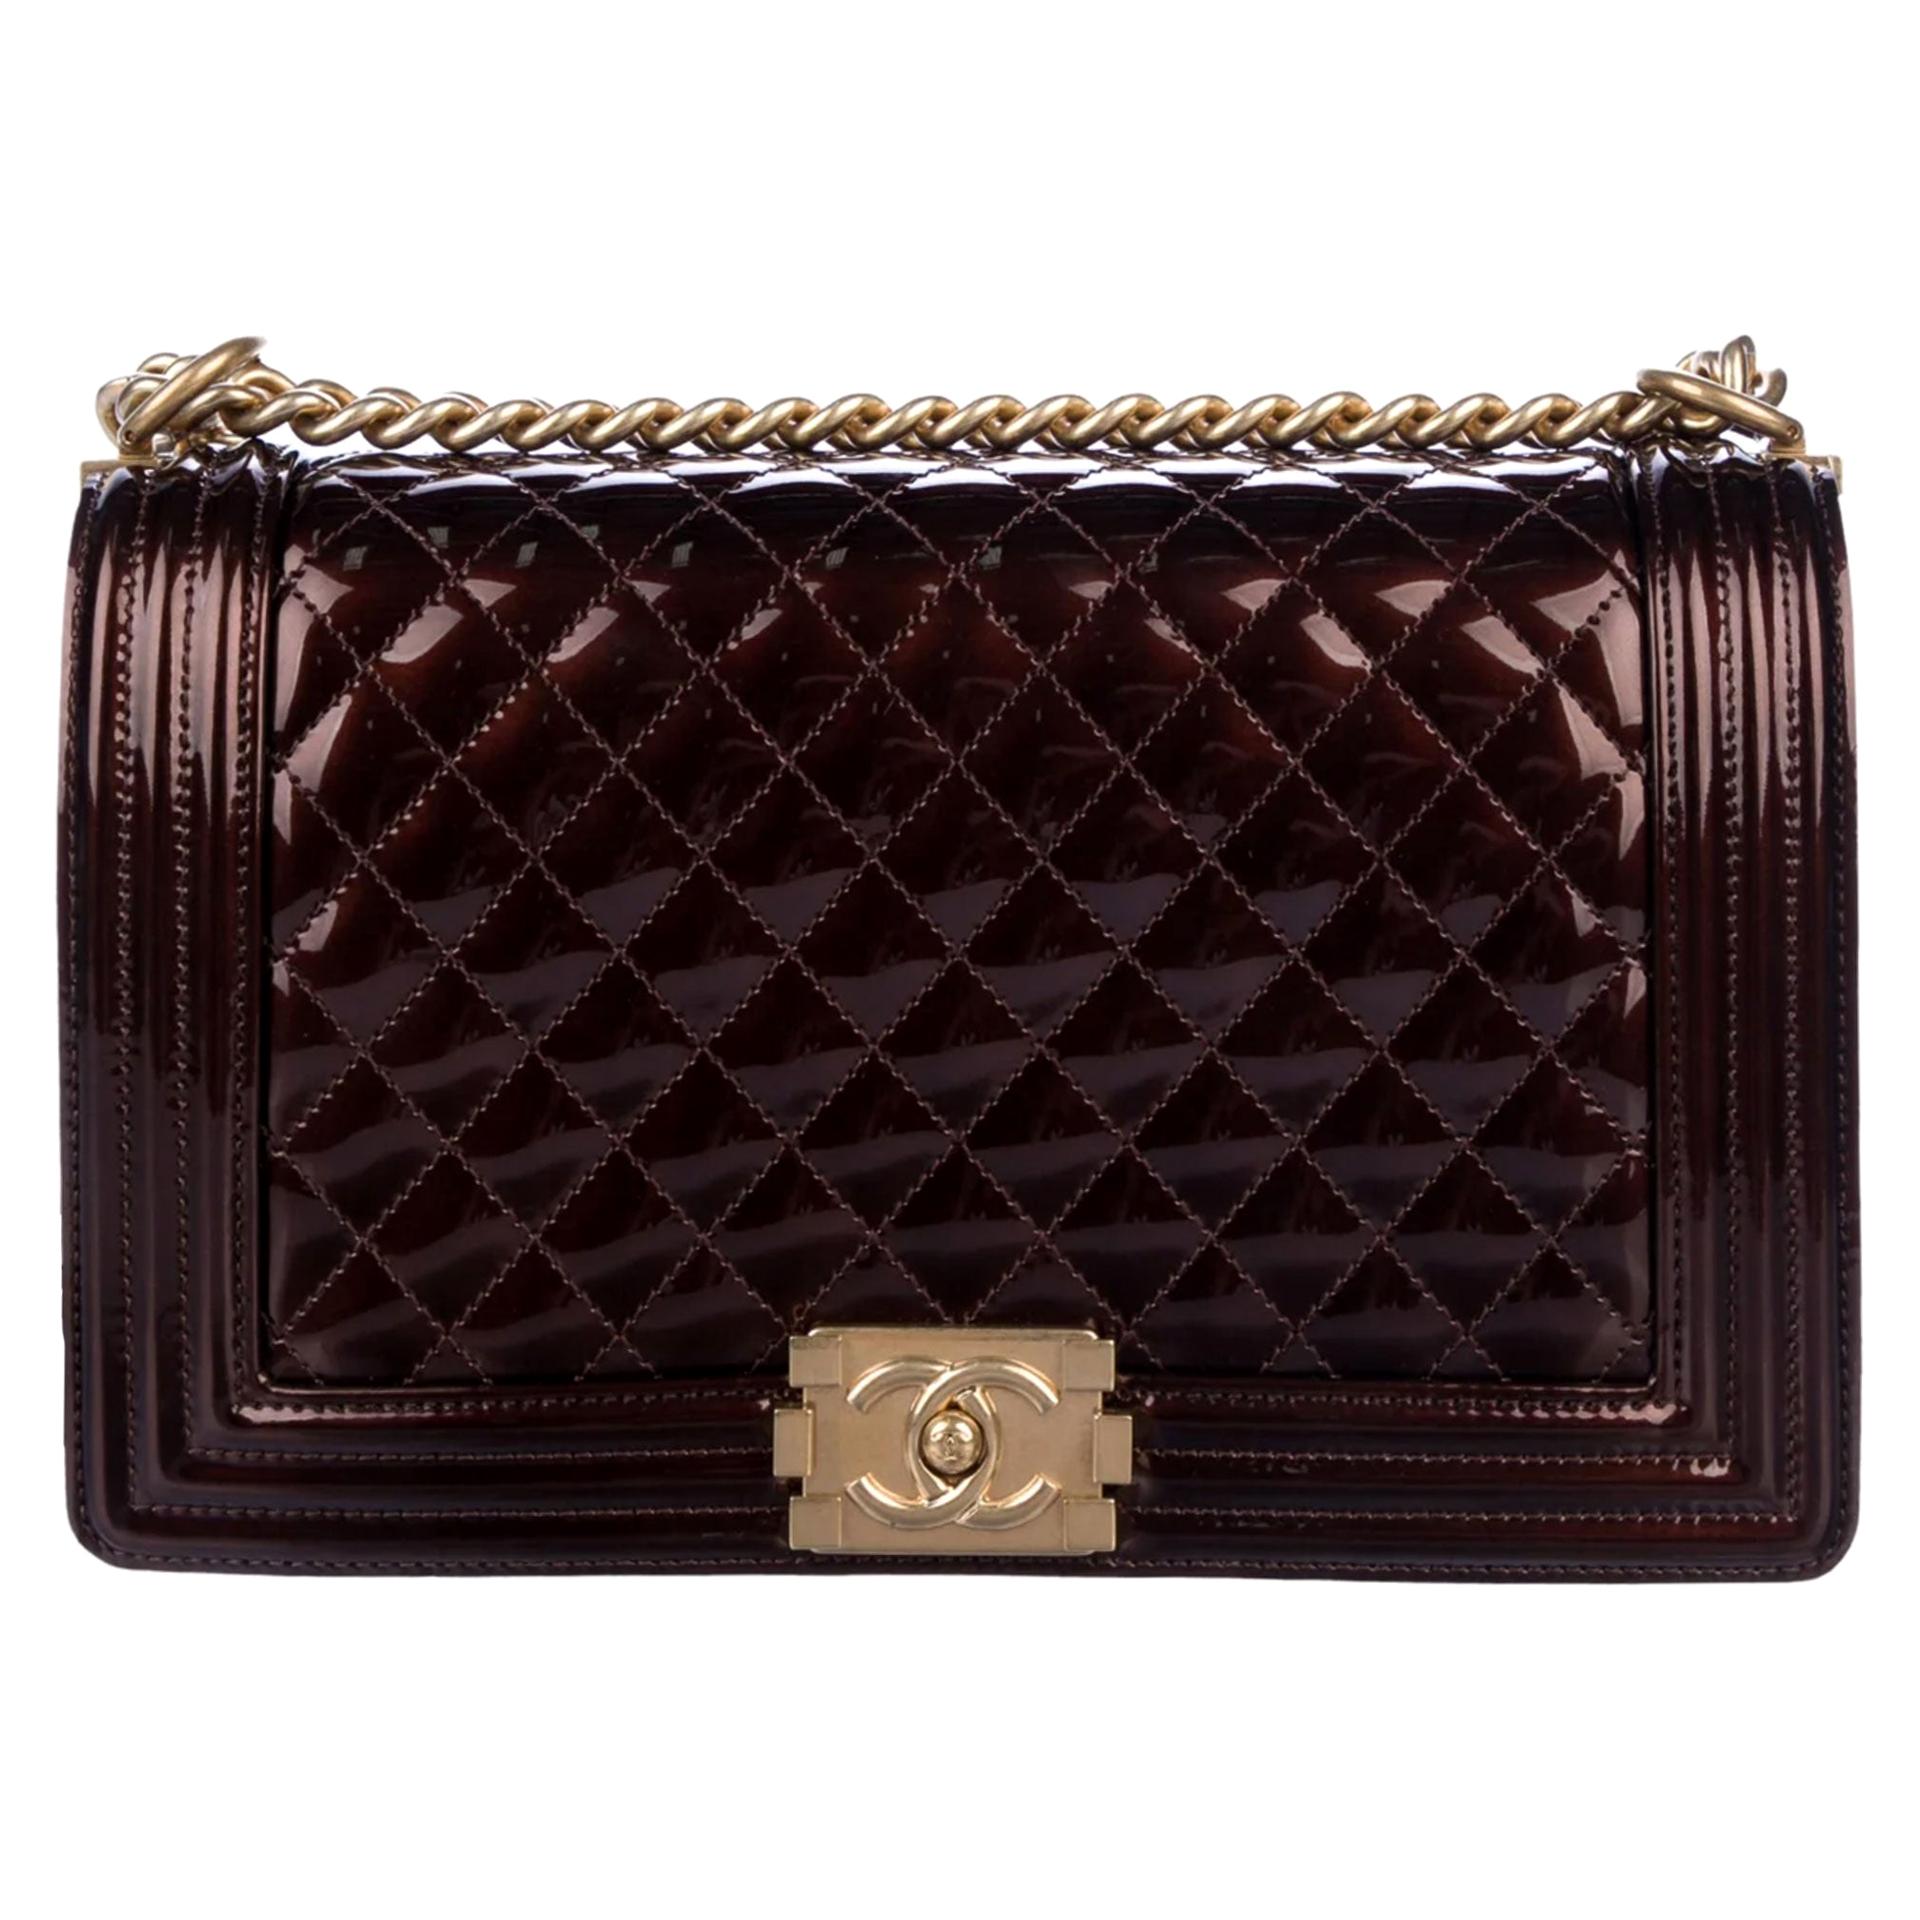 Rent  Chanel  Boy Chanel handbag in black lambskin  goldtone metal   BAGROMANCECOM